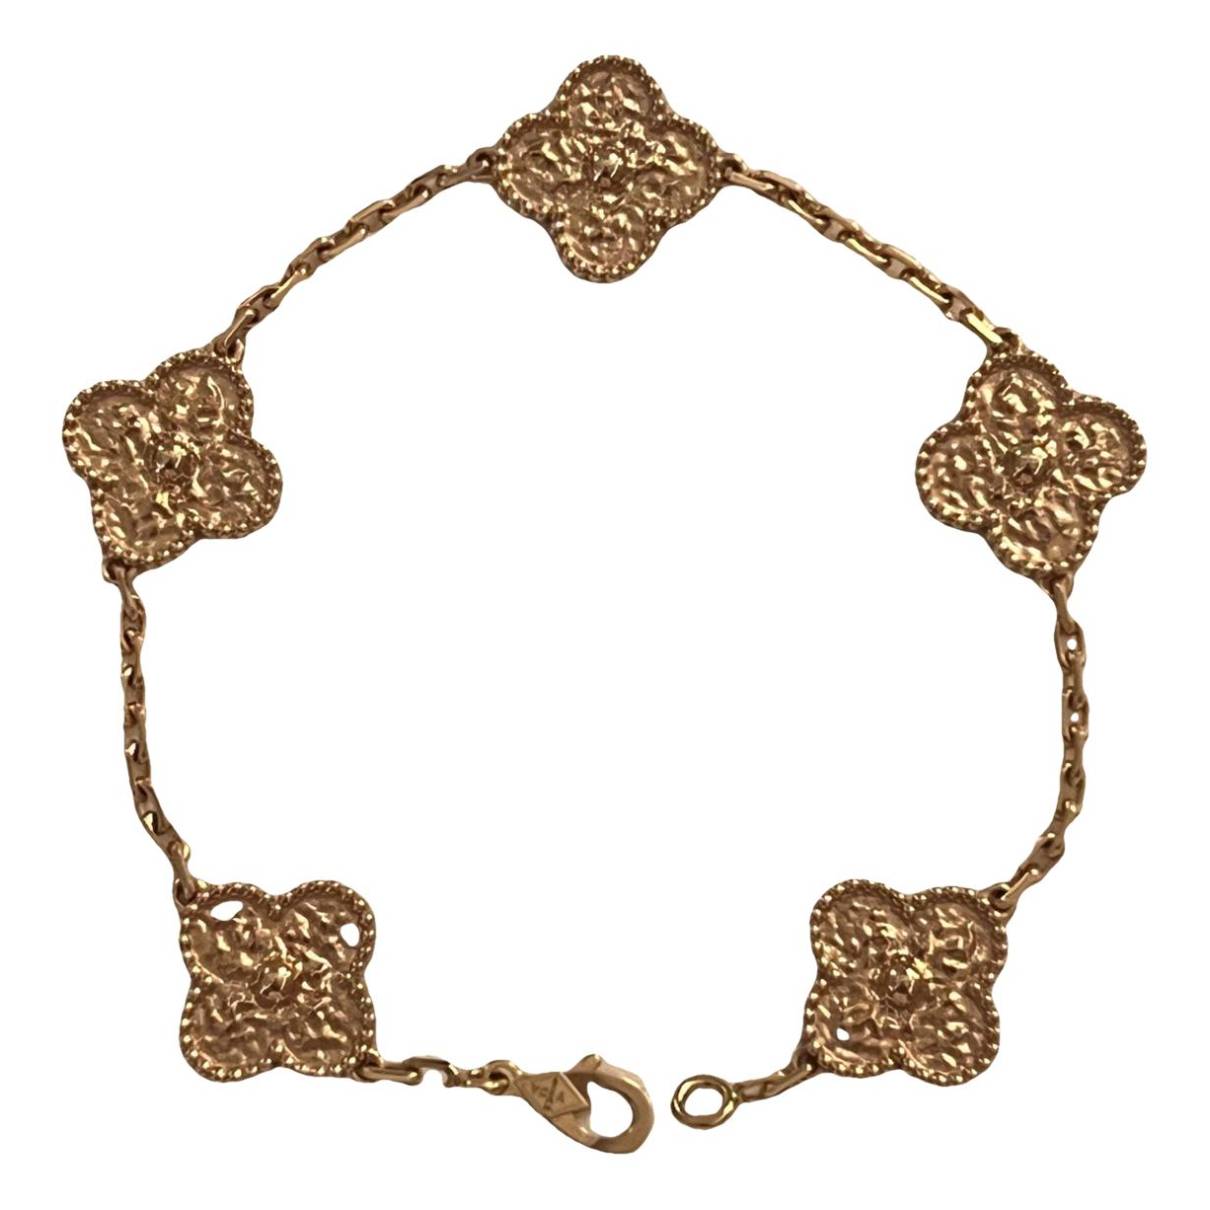 Vintage alhambra pink gold bracelet Van Cleef & Arpels Pink in